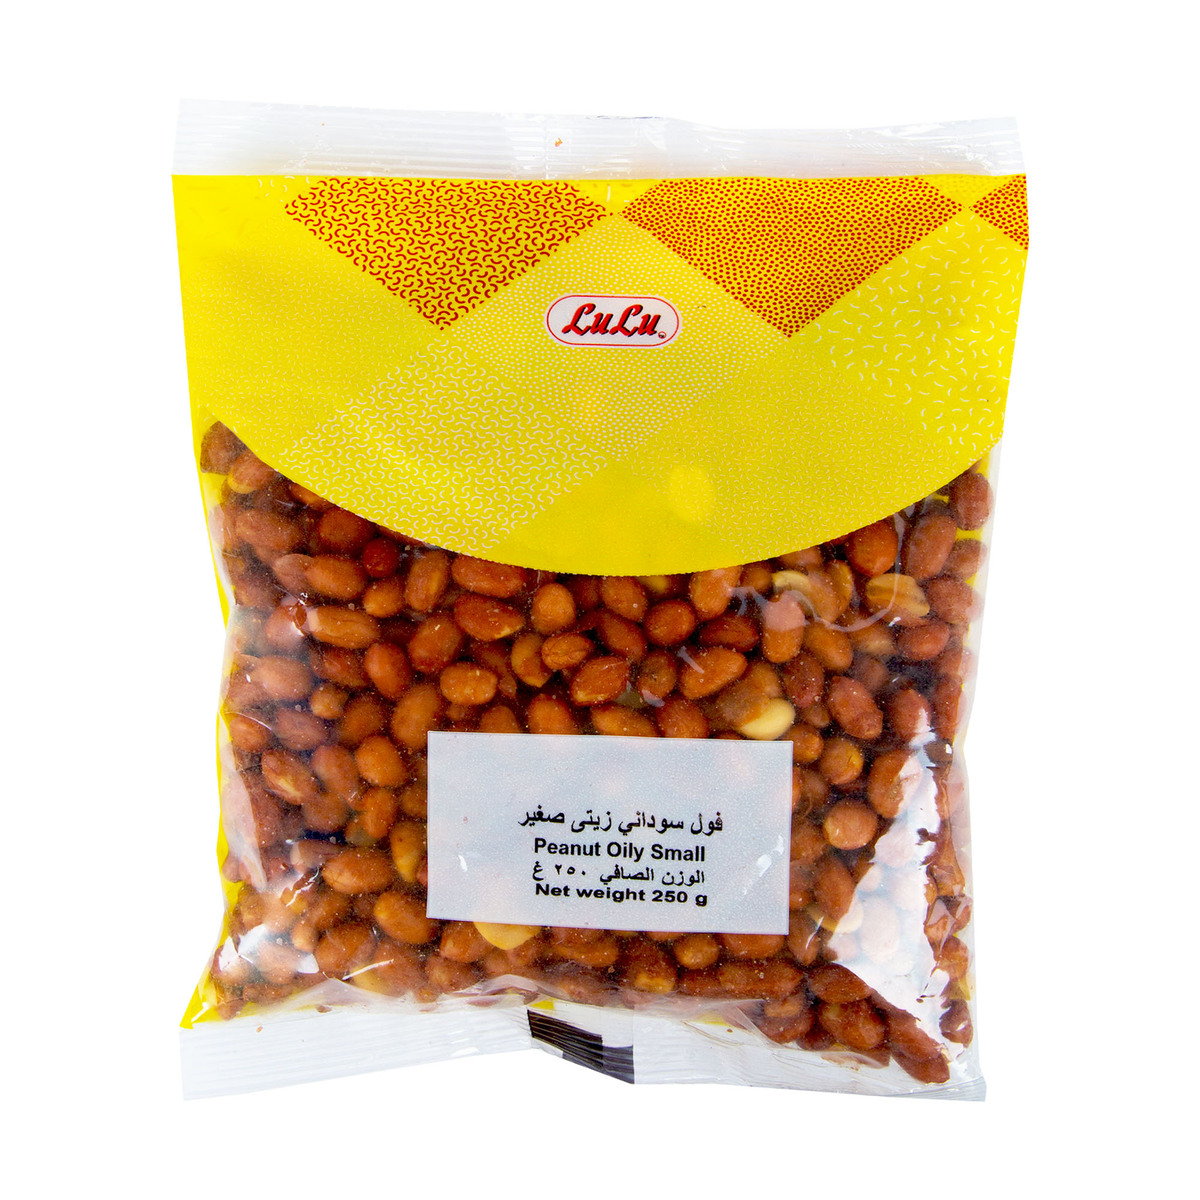 LuLu Peanut Oily Small 250 g